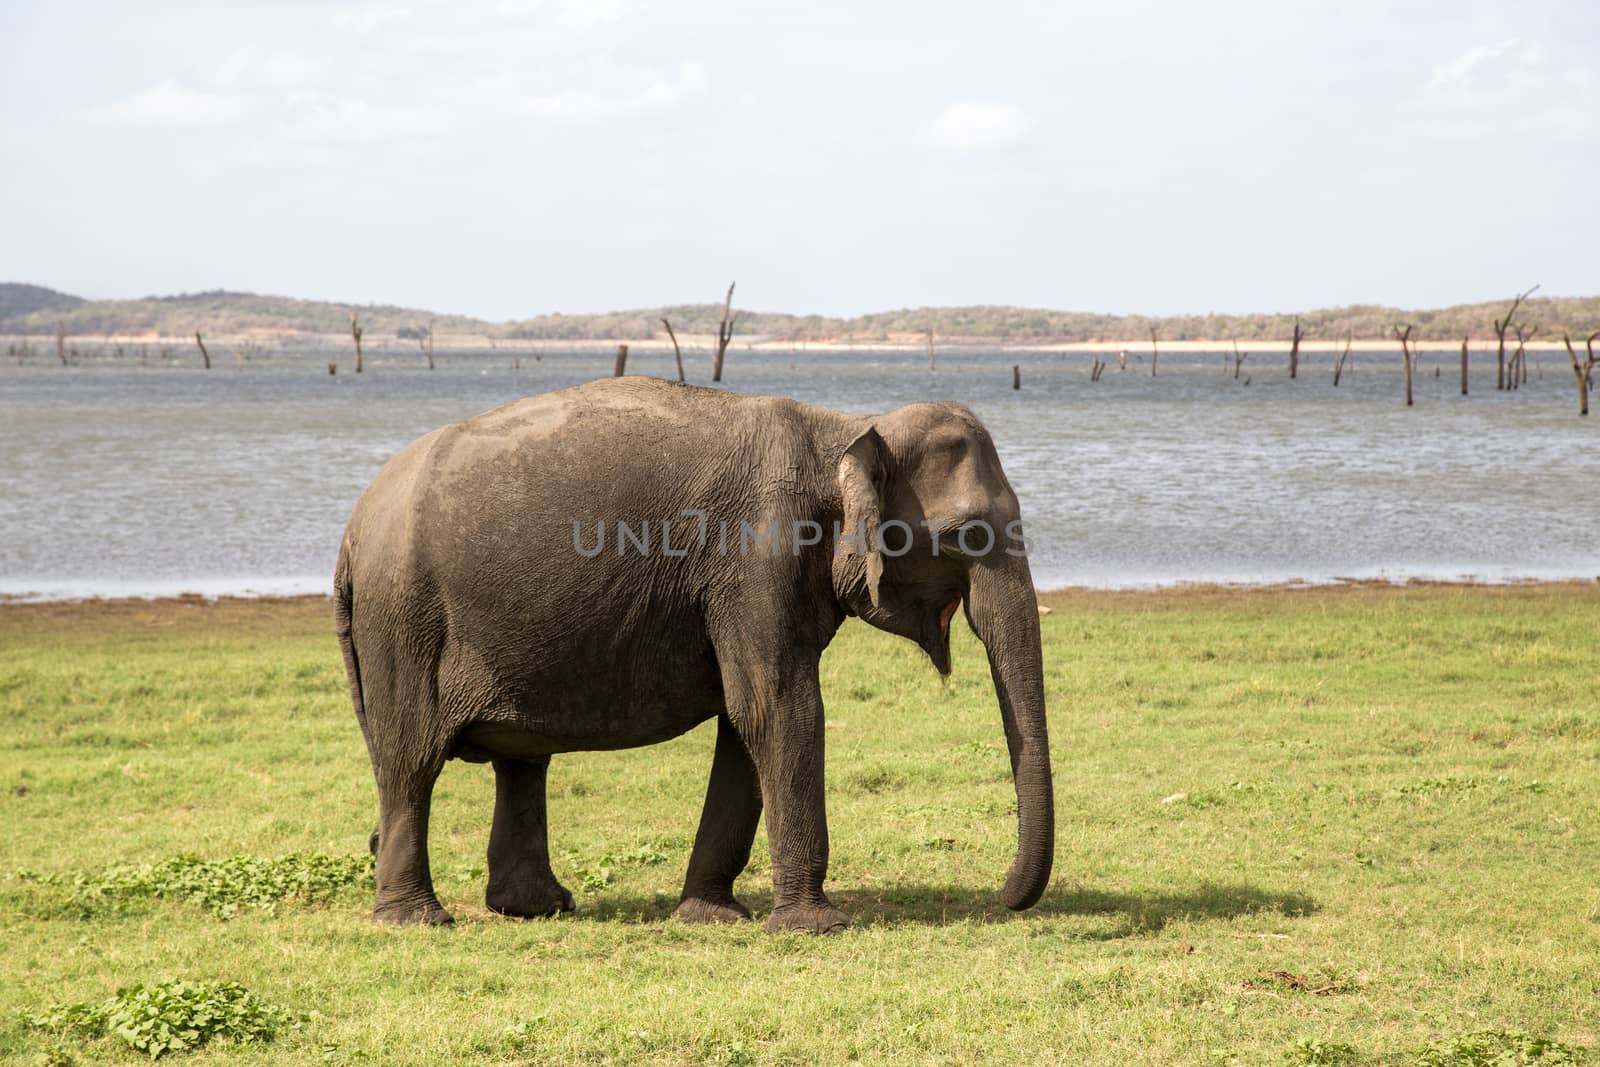 Kaudulla National Park, Sri Lanka - August 16, 2018: A single elephant at a lake in Kaudulla National Park